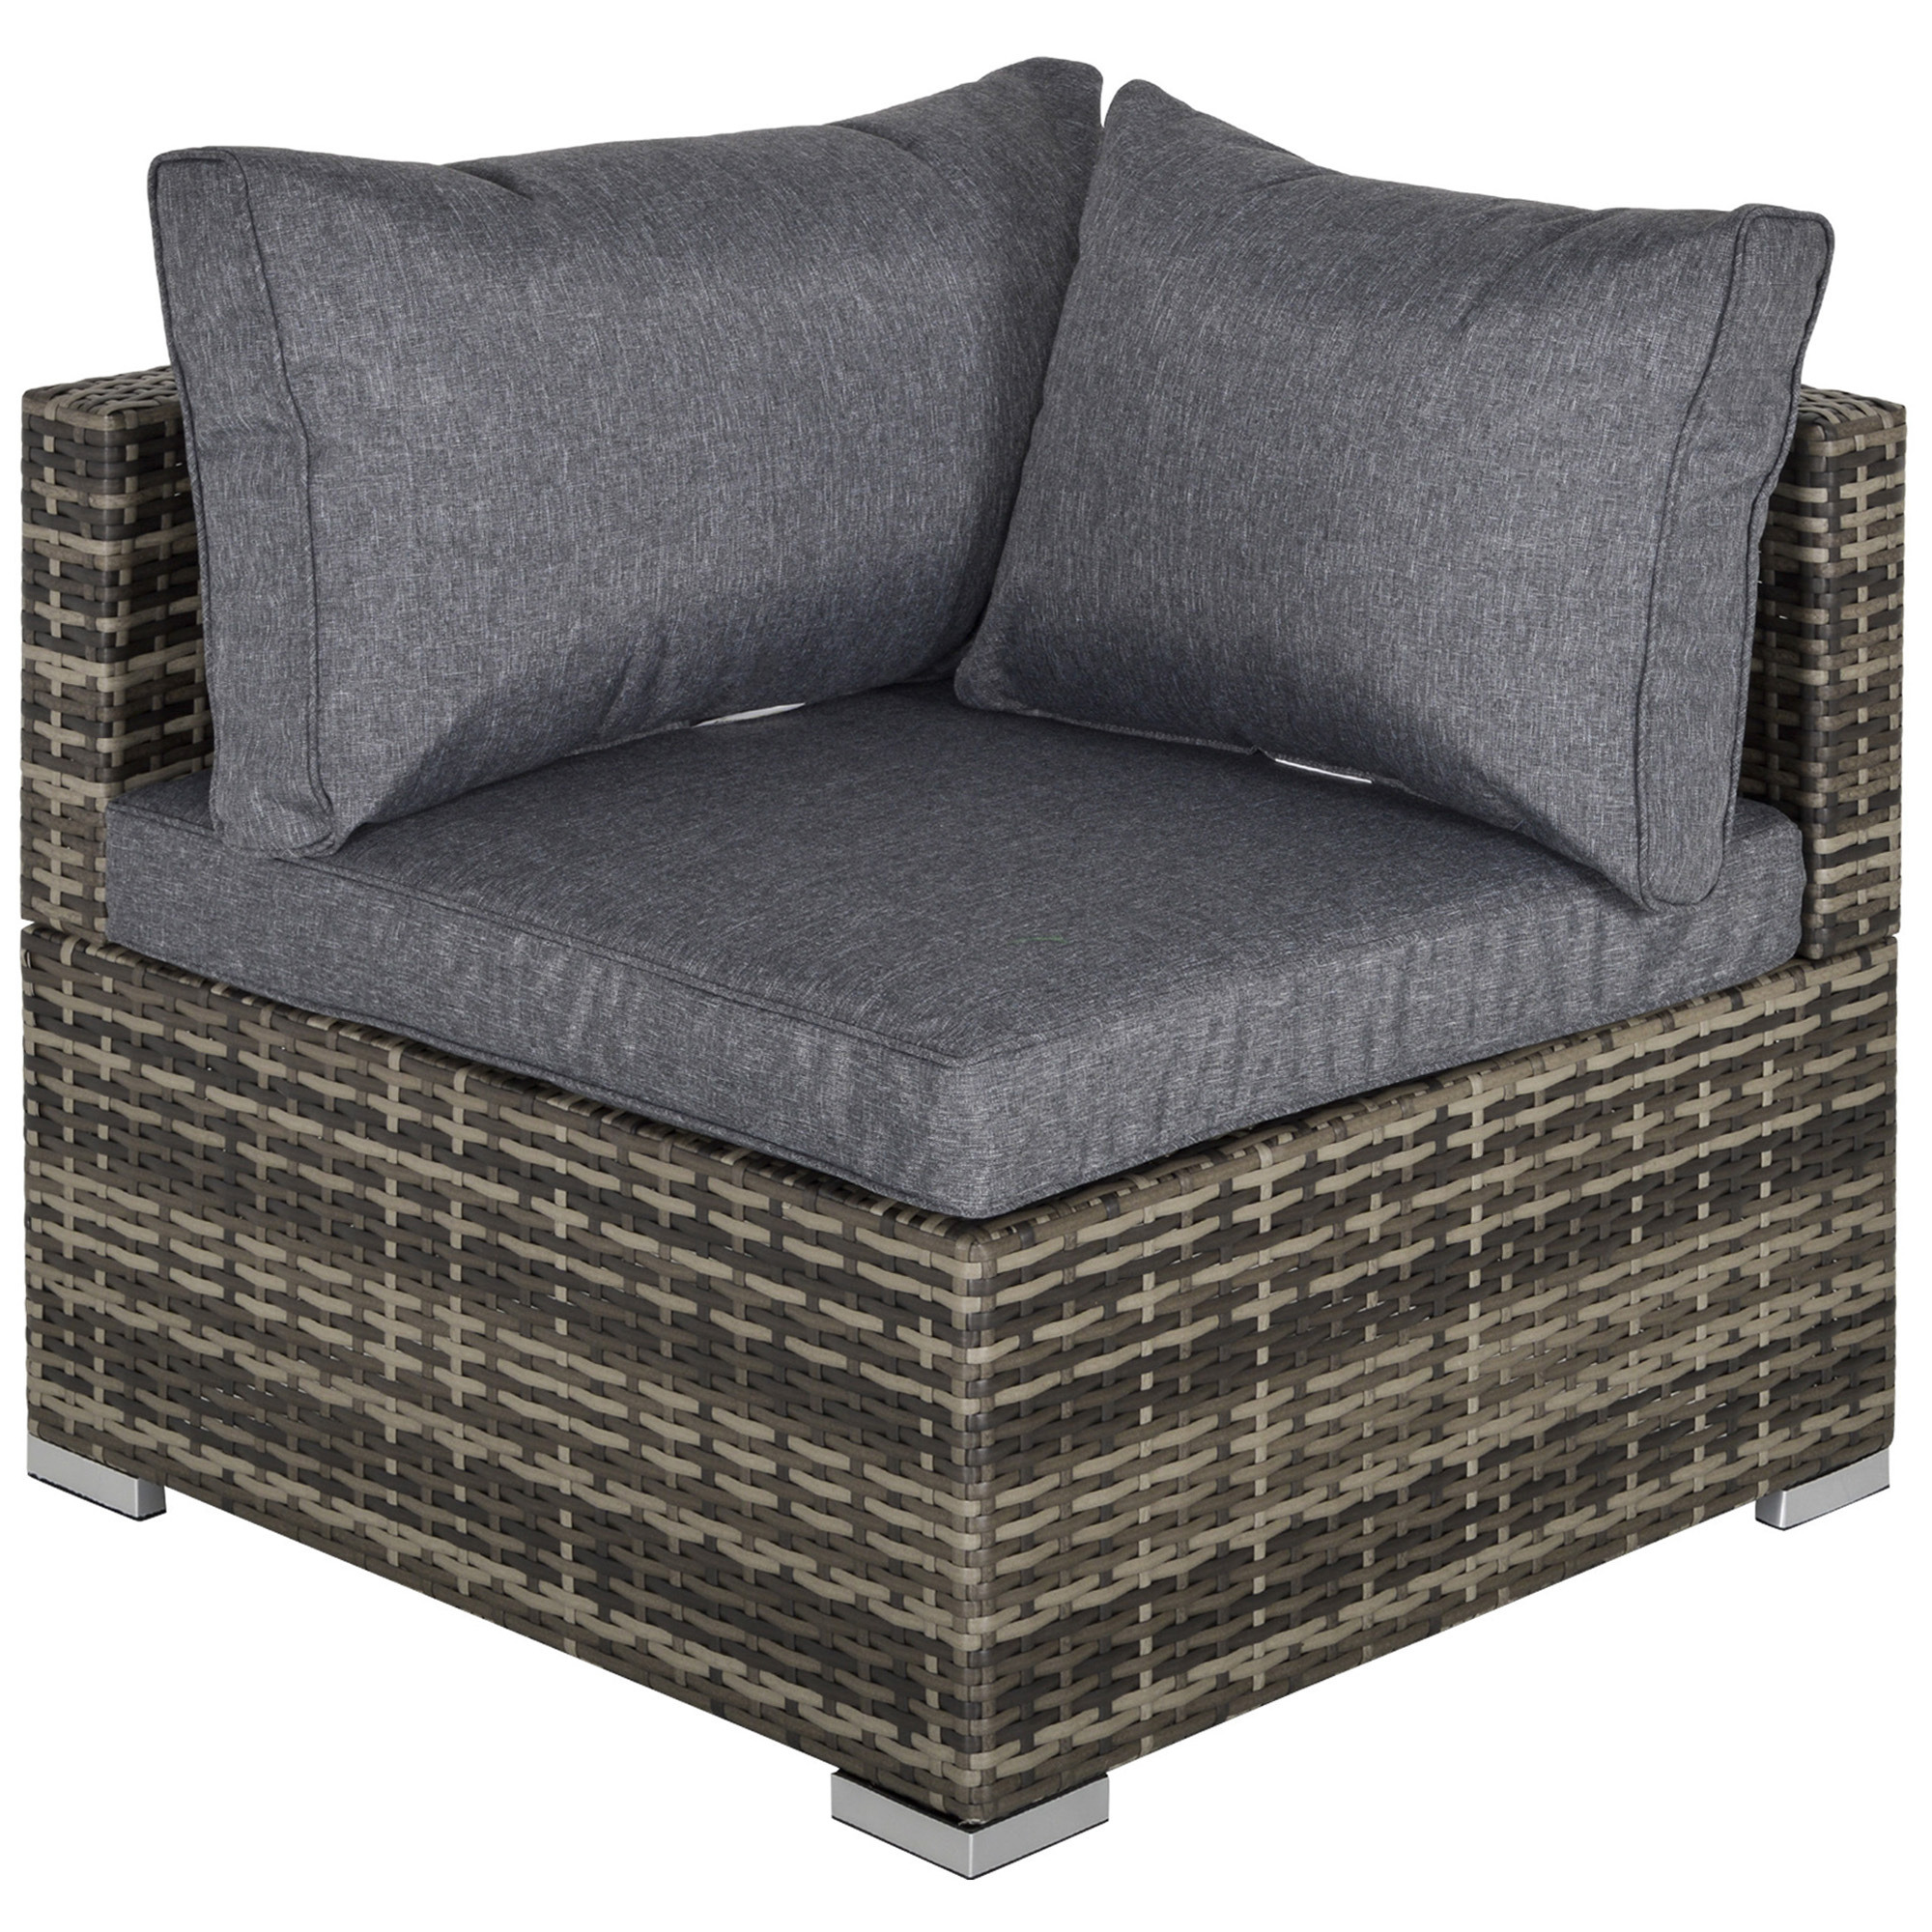 Outsunny PE Rattan Wicker Corner Sofa Garden Furniture Single Sofa Chair w/ Cushions, Deep Grey